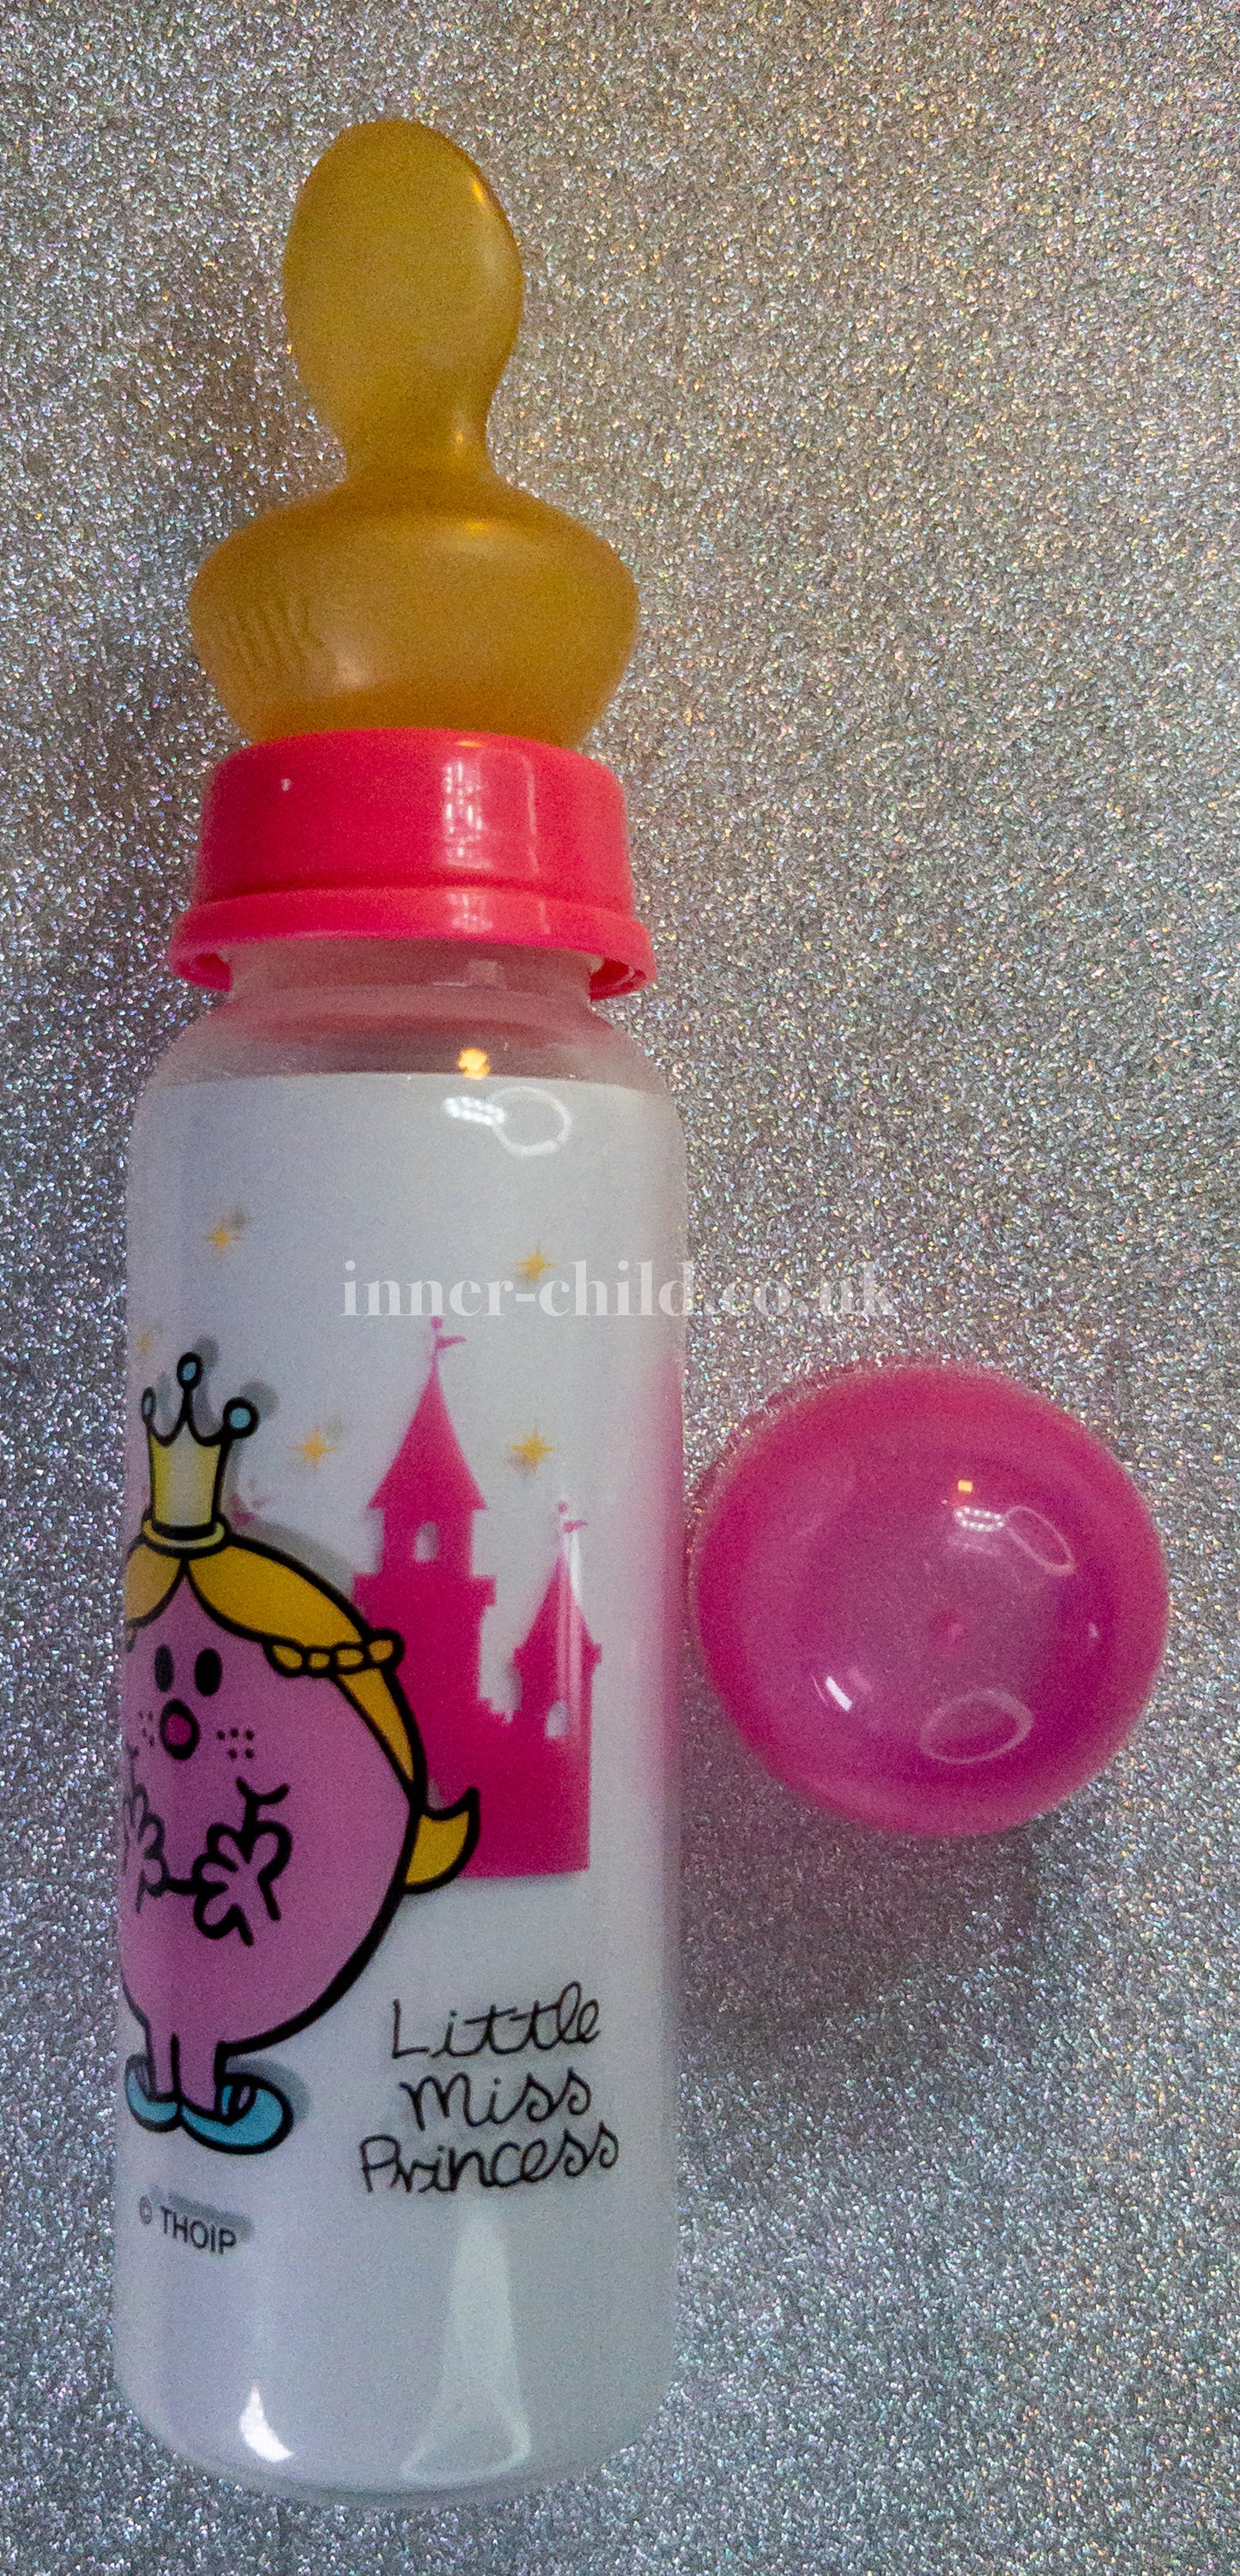 Little Miss Princess bottle